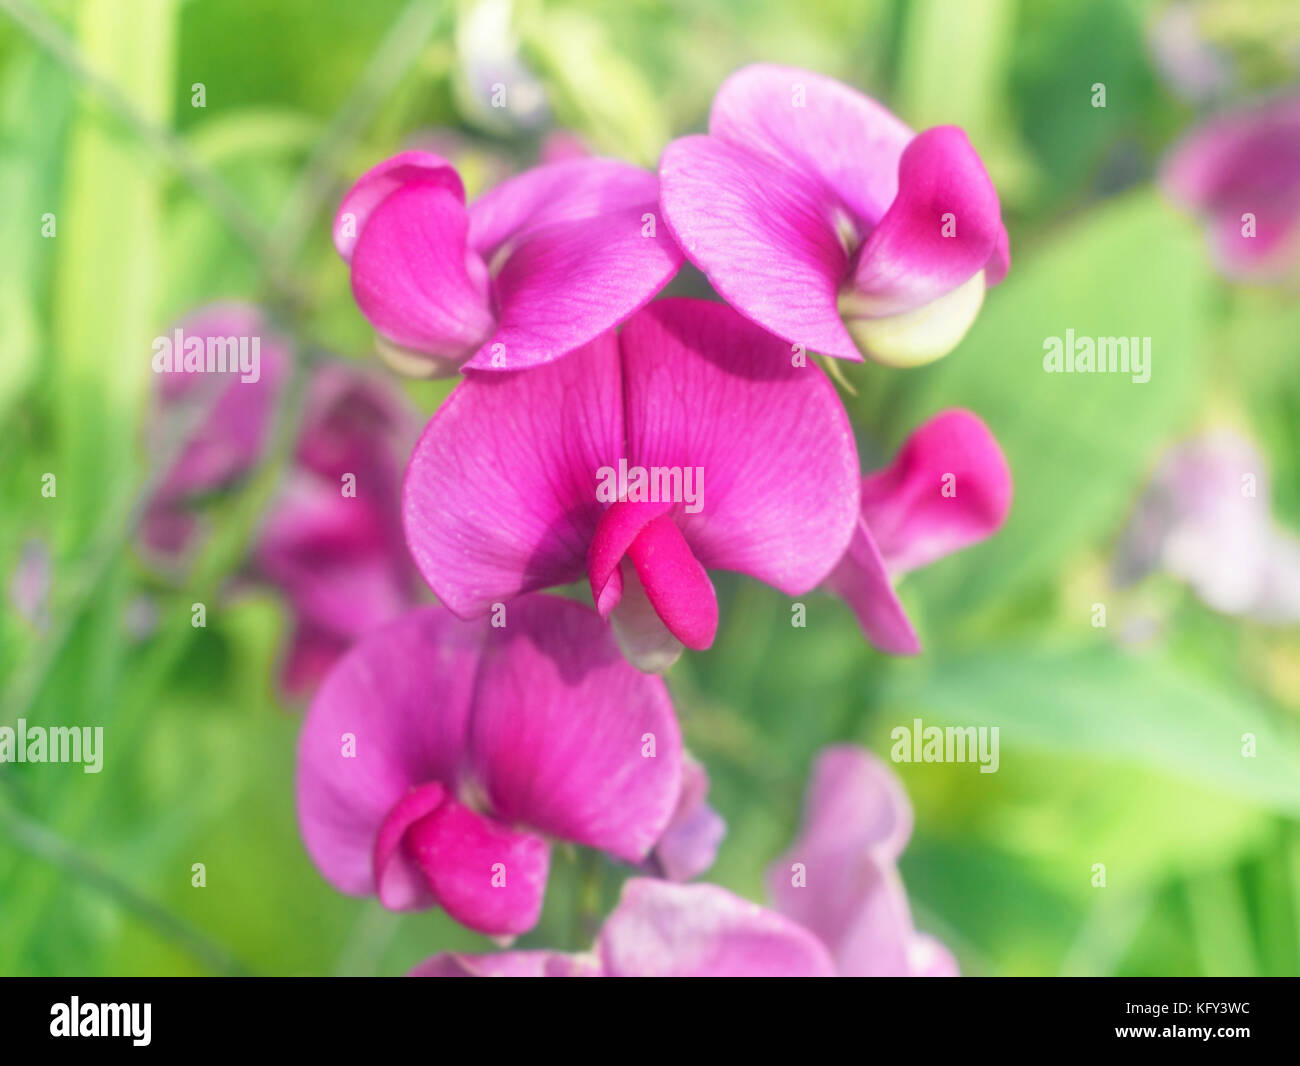 Beauty bright pink flowers of lathyrus odoratus at summer garden Stock Photo